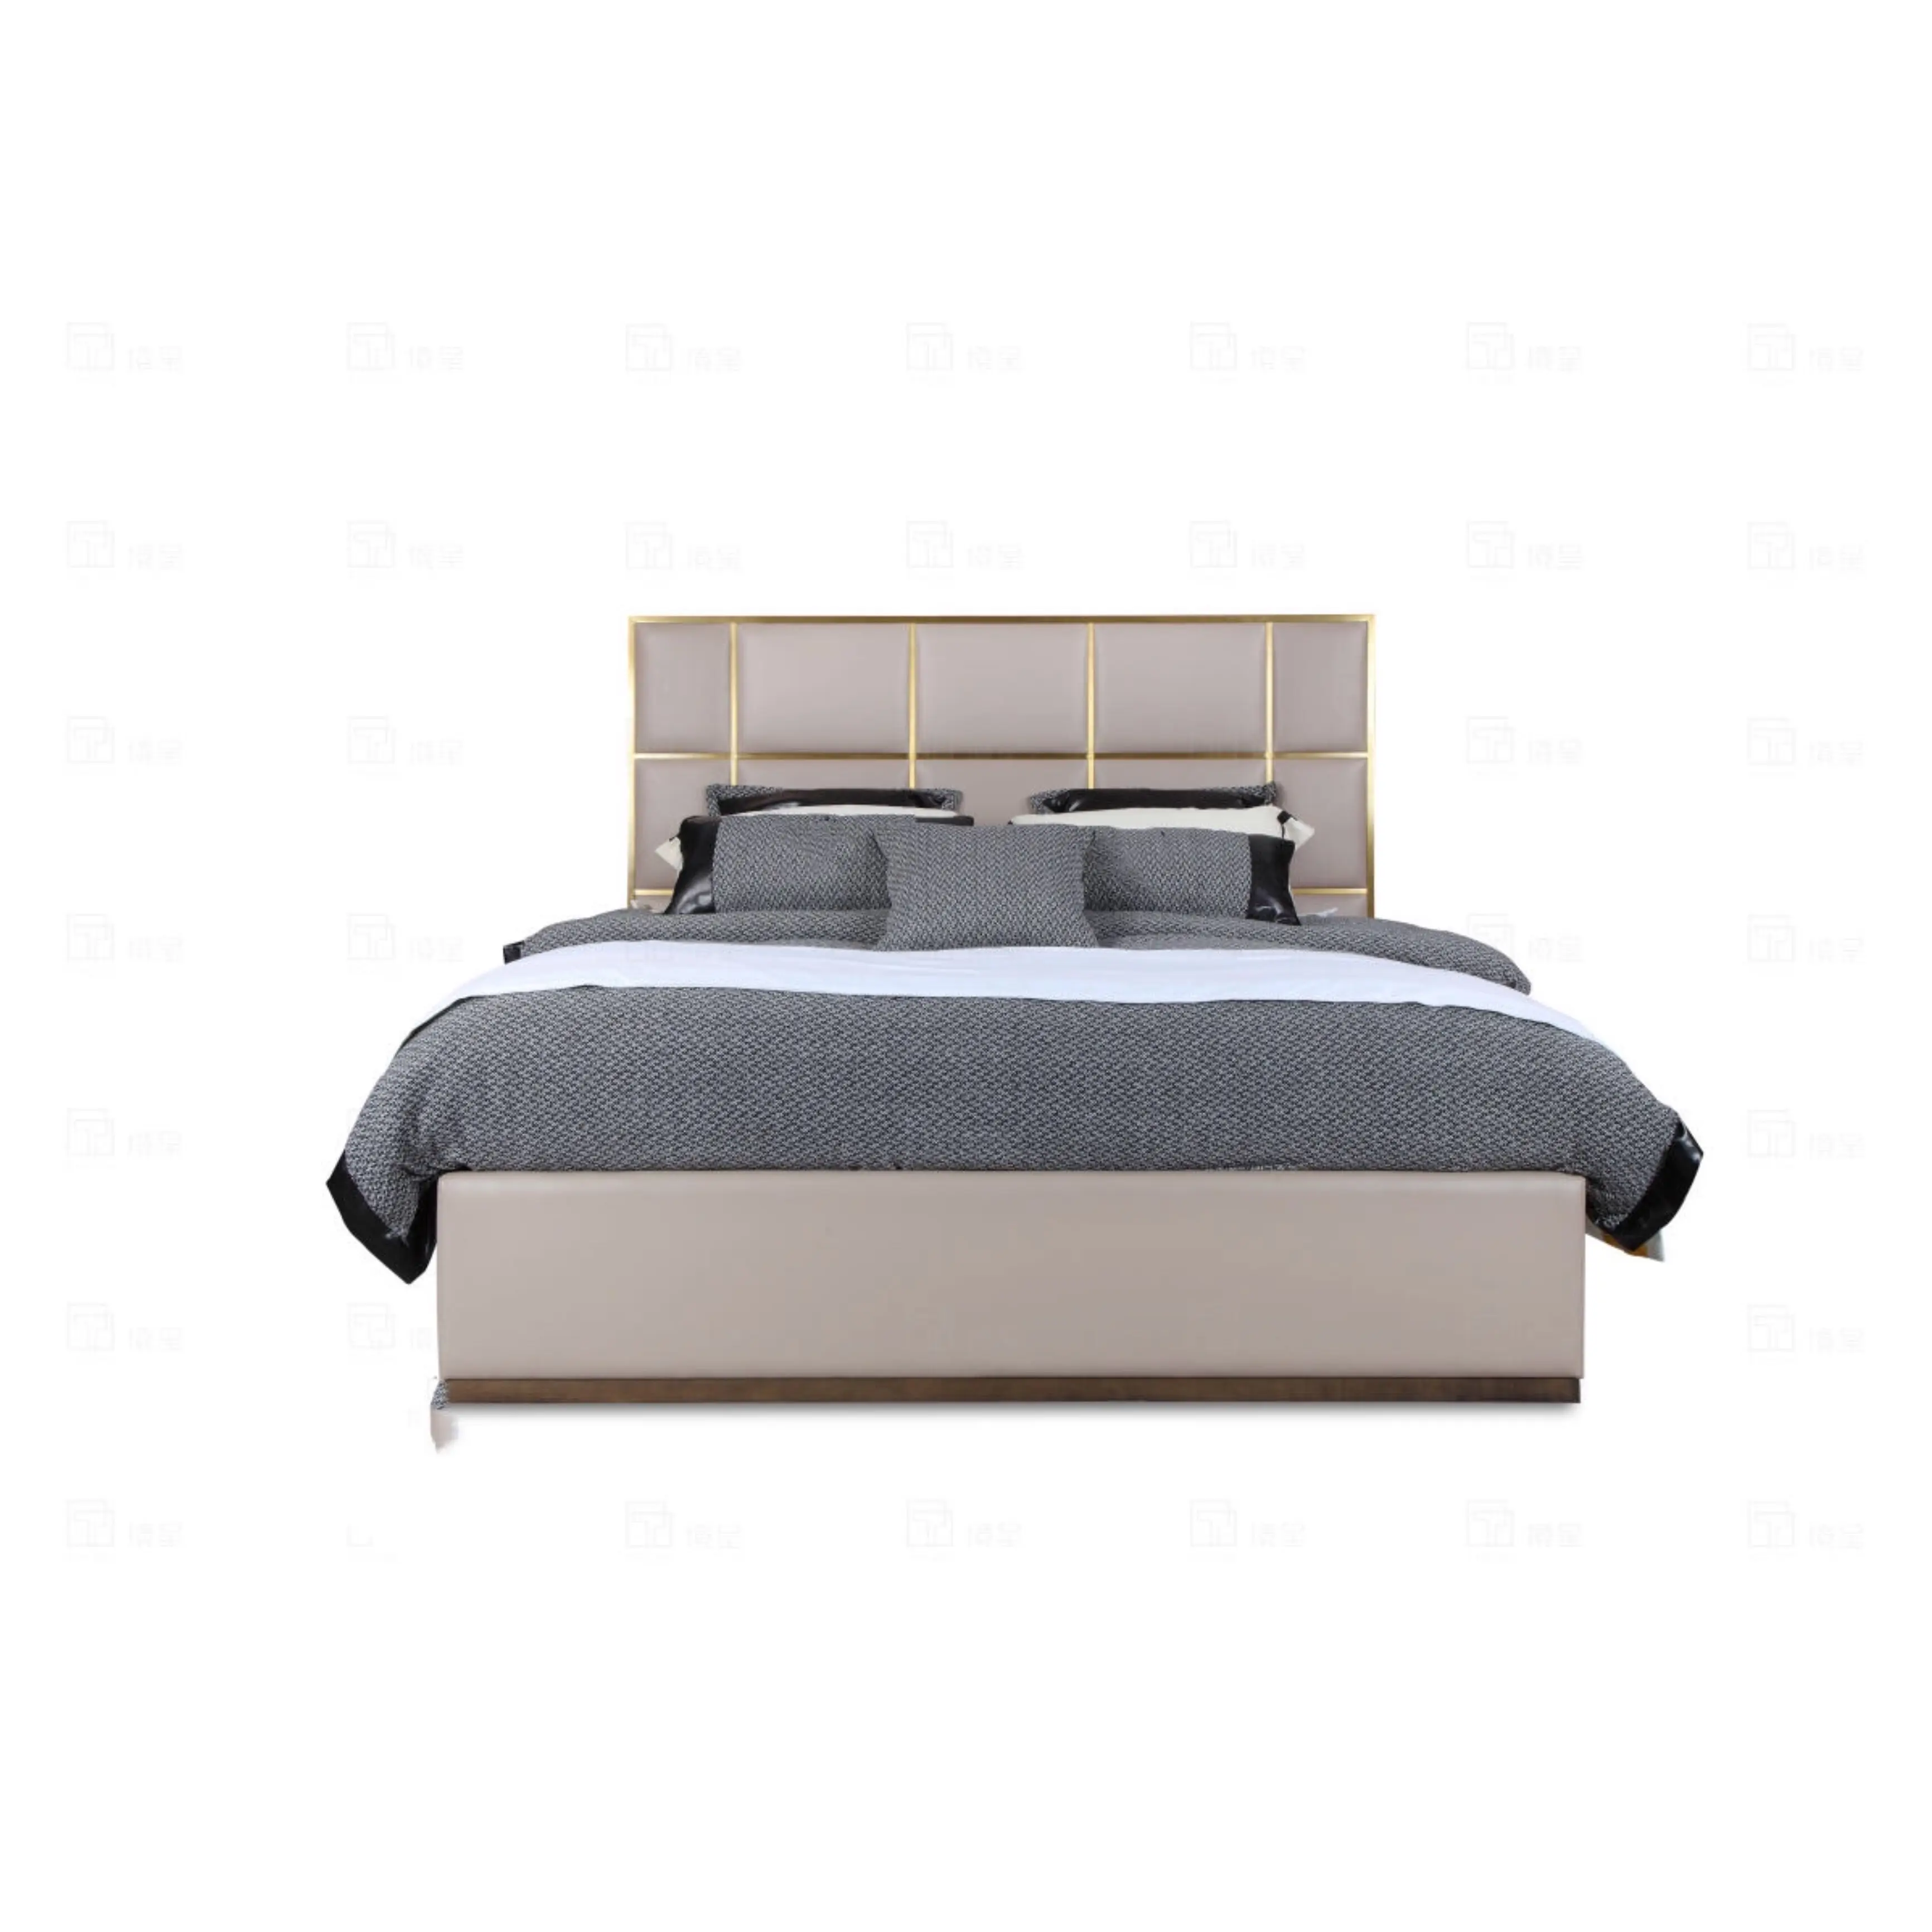 Desain Baru 2021 Tempat Tidur Kamar Tidur Ukuran Double King Tempat Tidur Furnitur Modern Mewah Serat Mikro Kulit